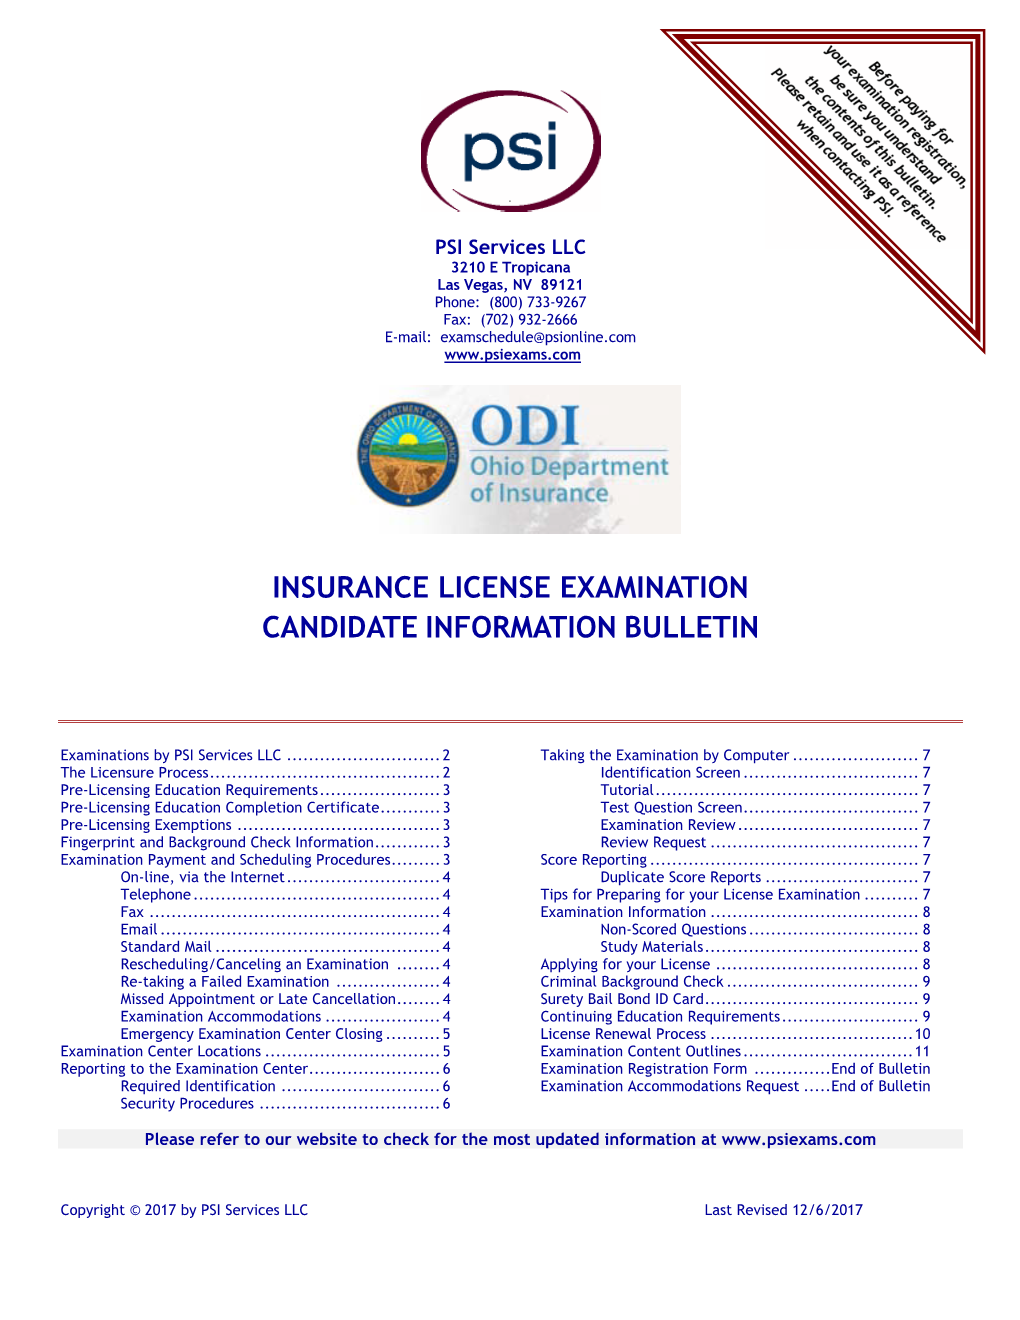 Insurance License Examination Candidate Information Bulletin